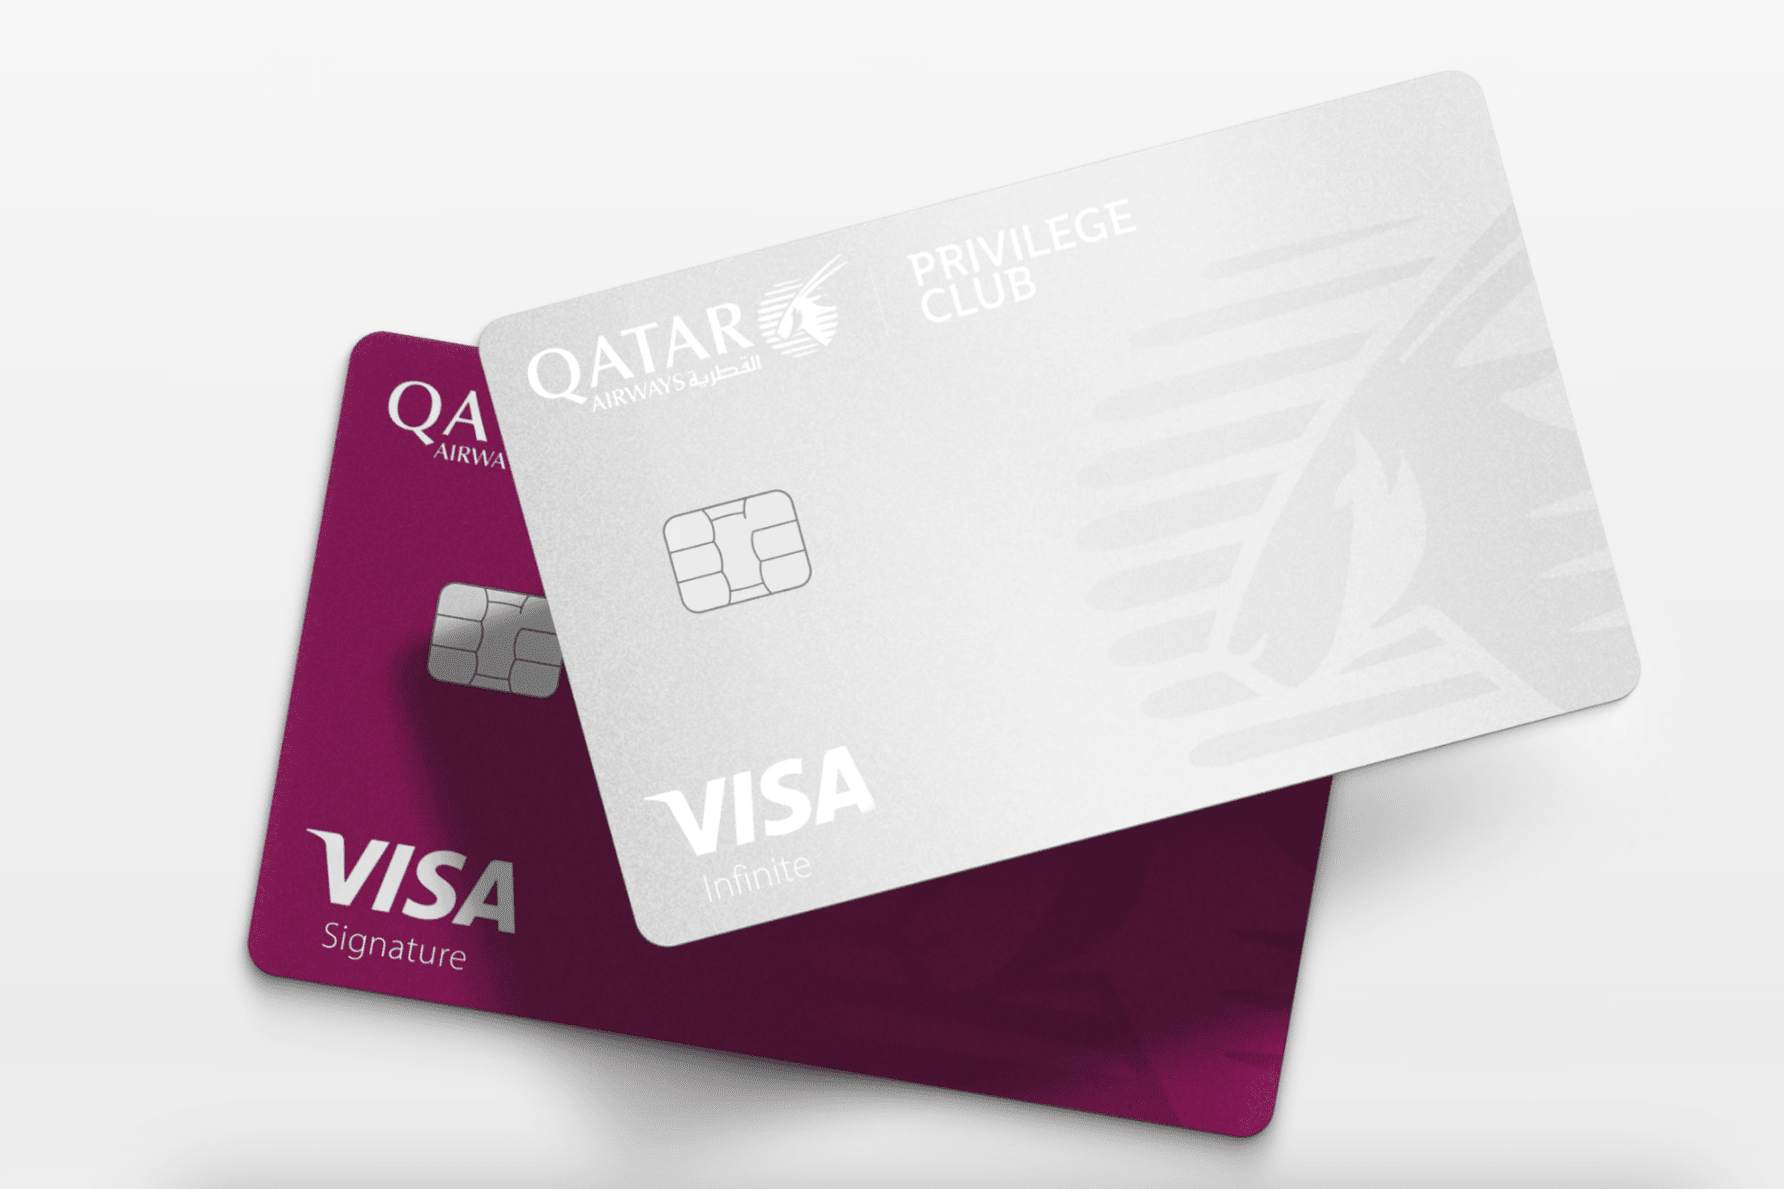 Qatar Airways' new Visa cobranded credit cards